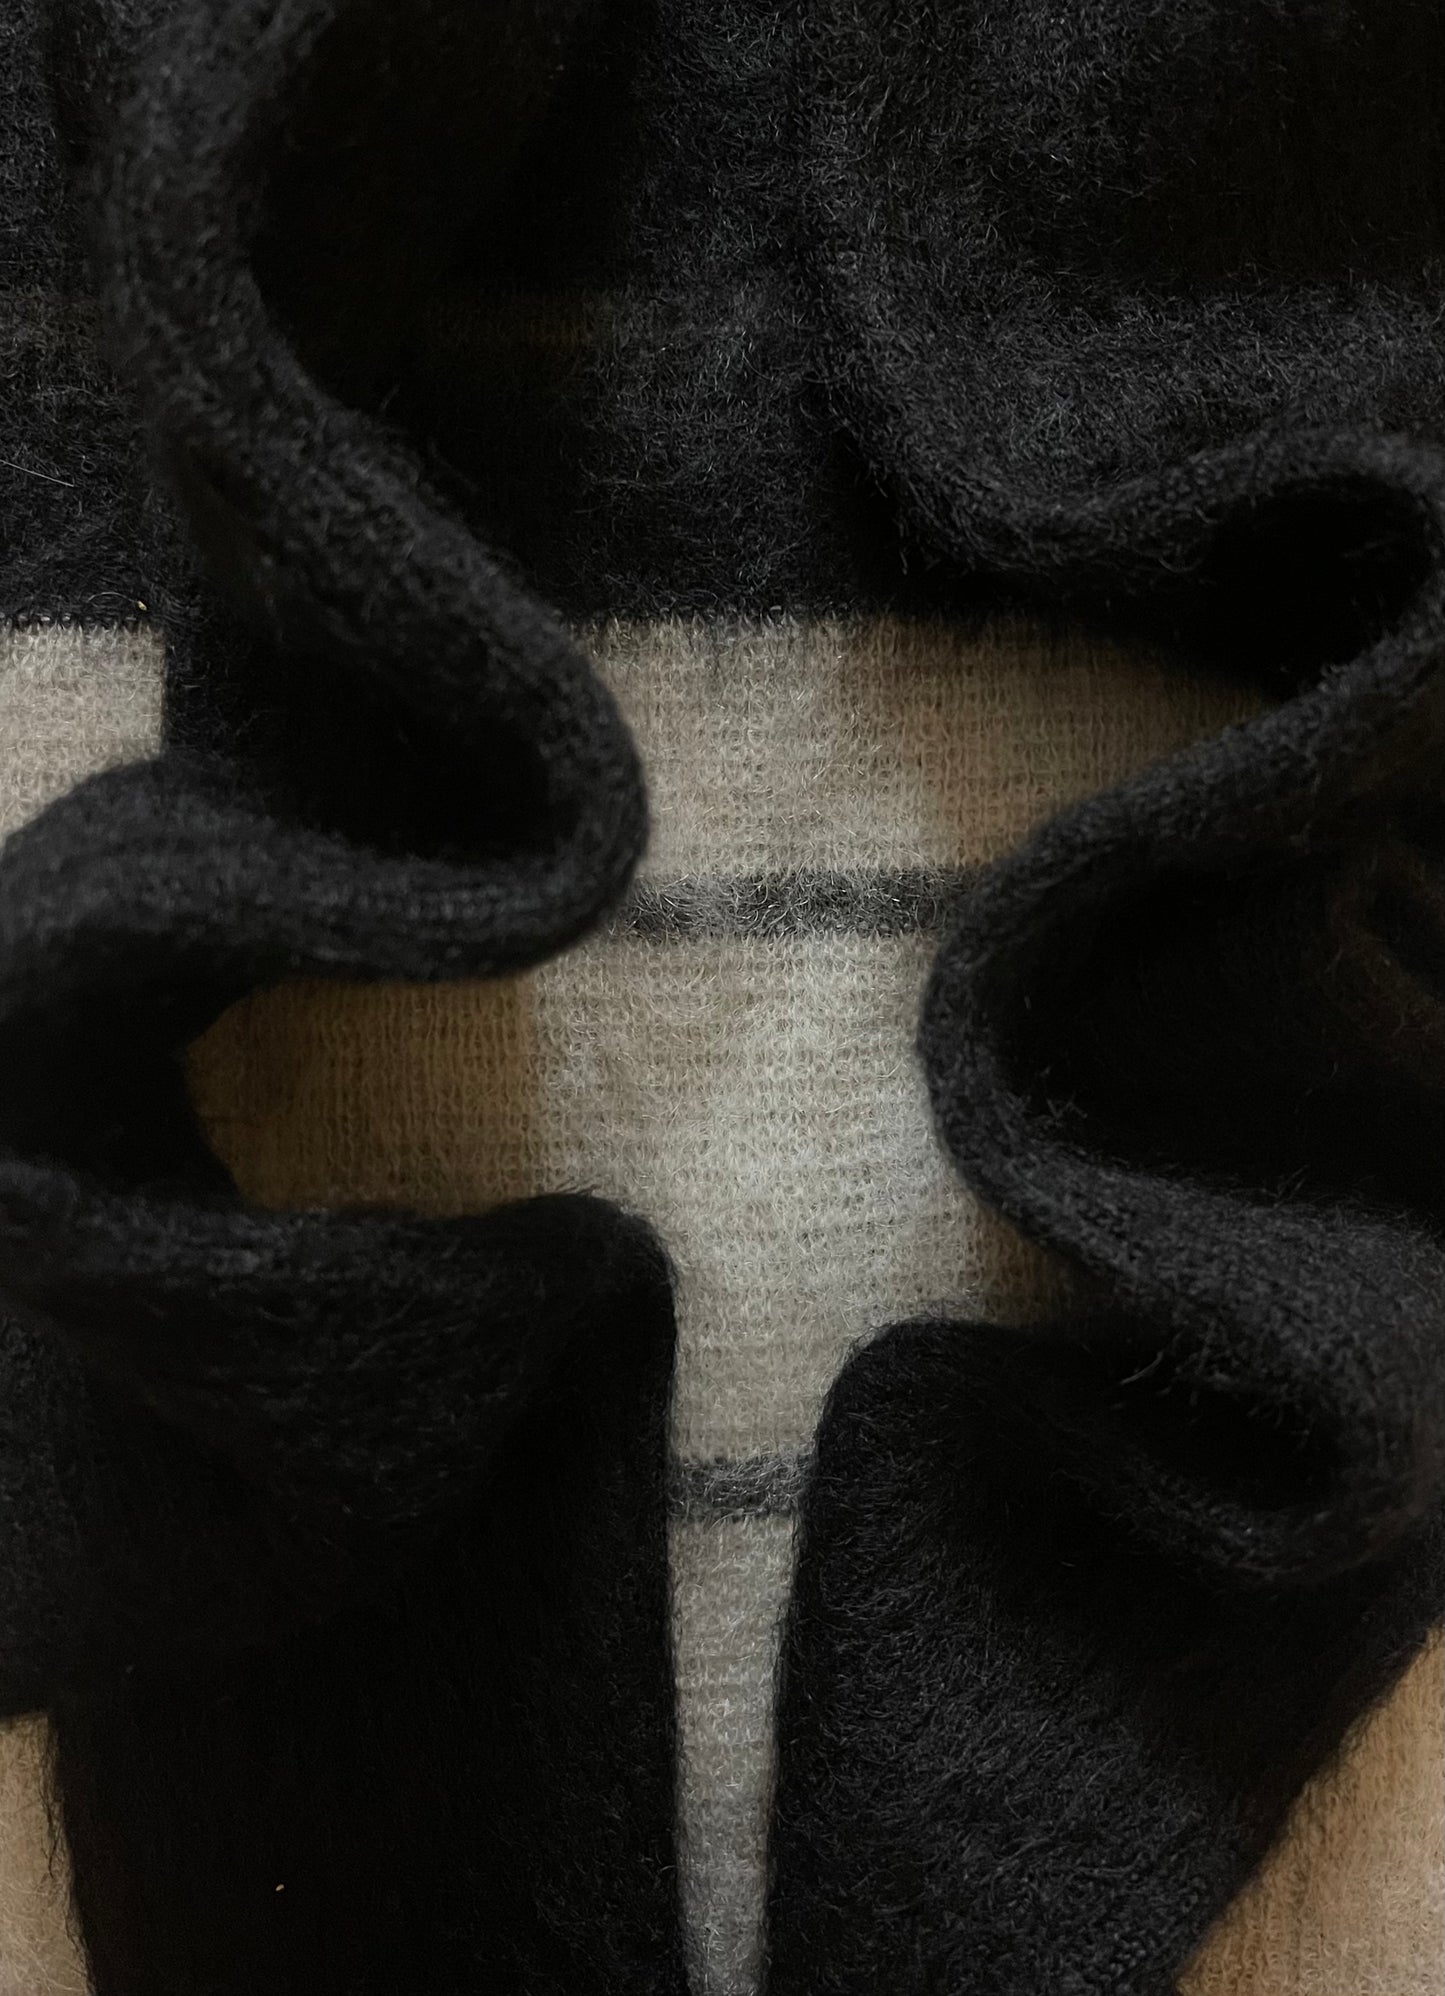 Autumn Winter 2015 Rick Owens ‘Mastadon’ Mohair Knit Sweater